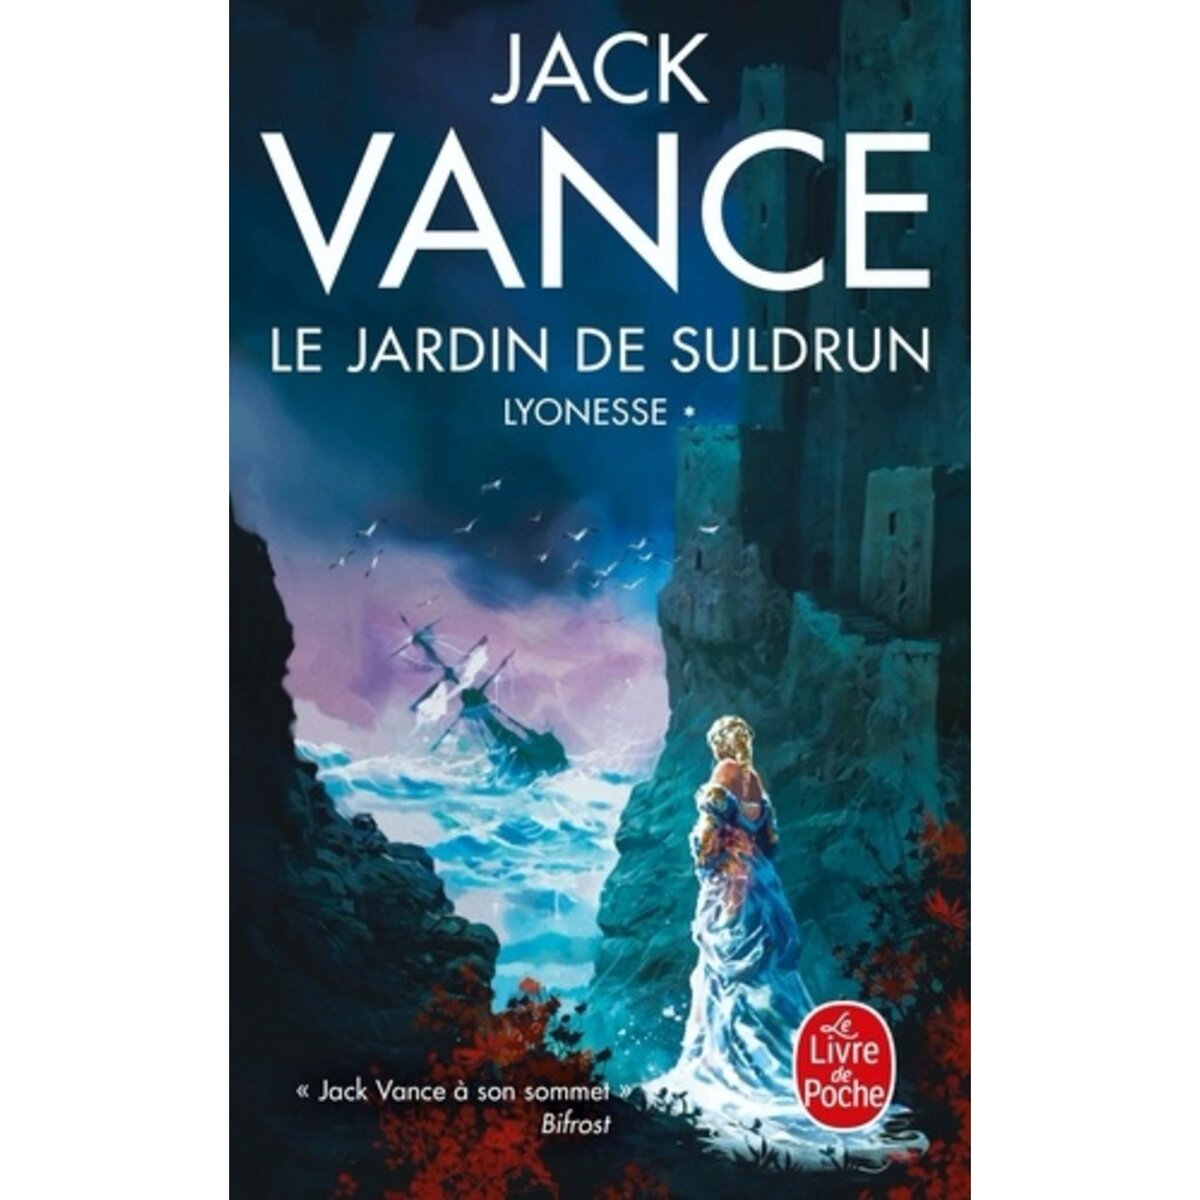  LE CYCLE DE LYONESSE TOME 1 : LE JARDIN DE SULDRUN, Vance Jack